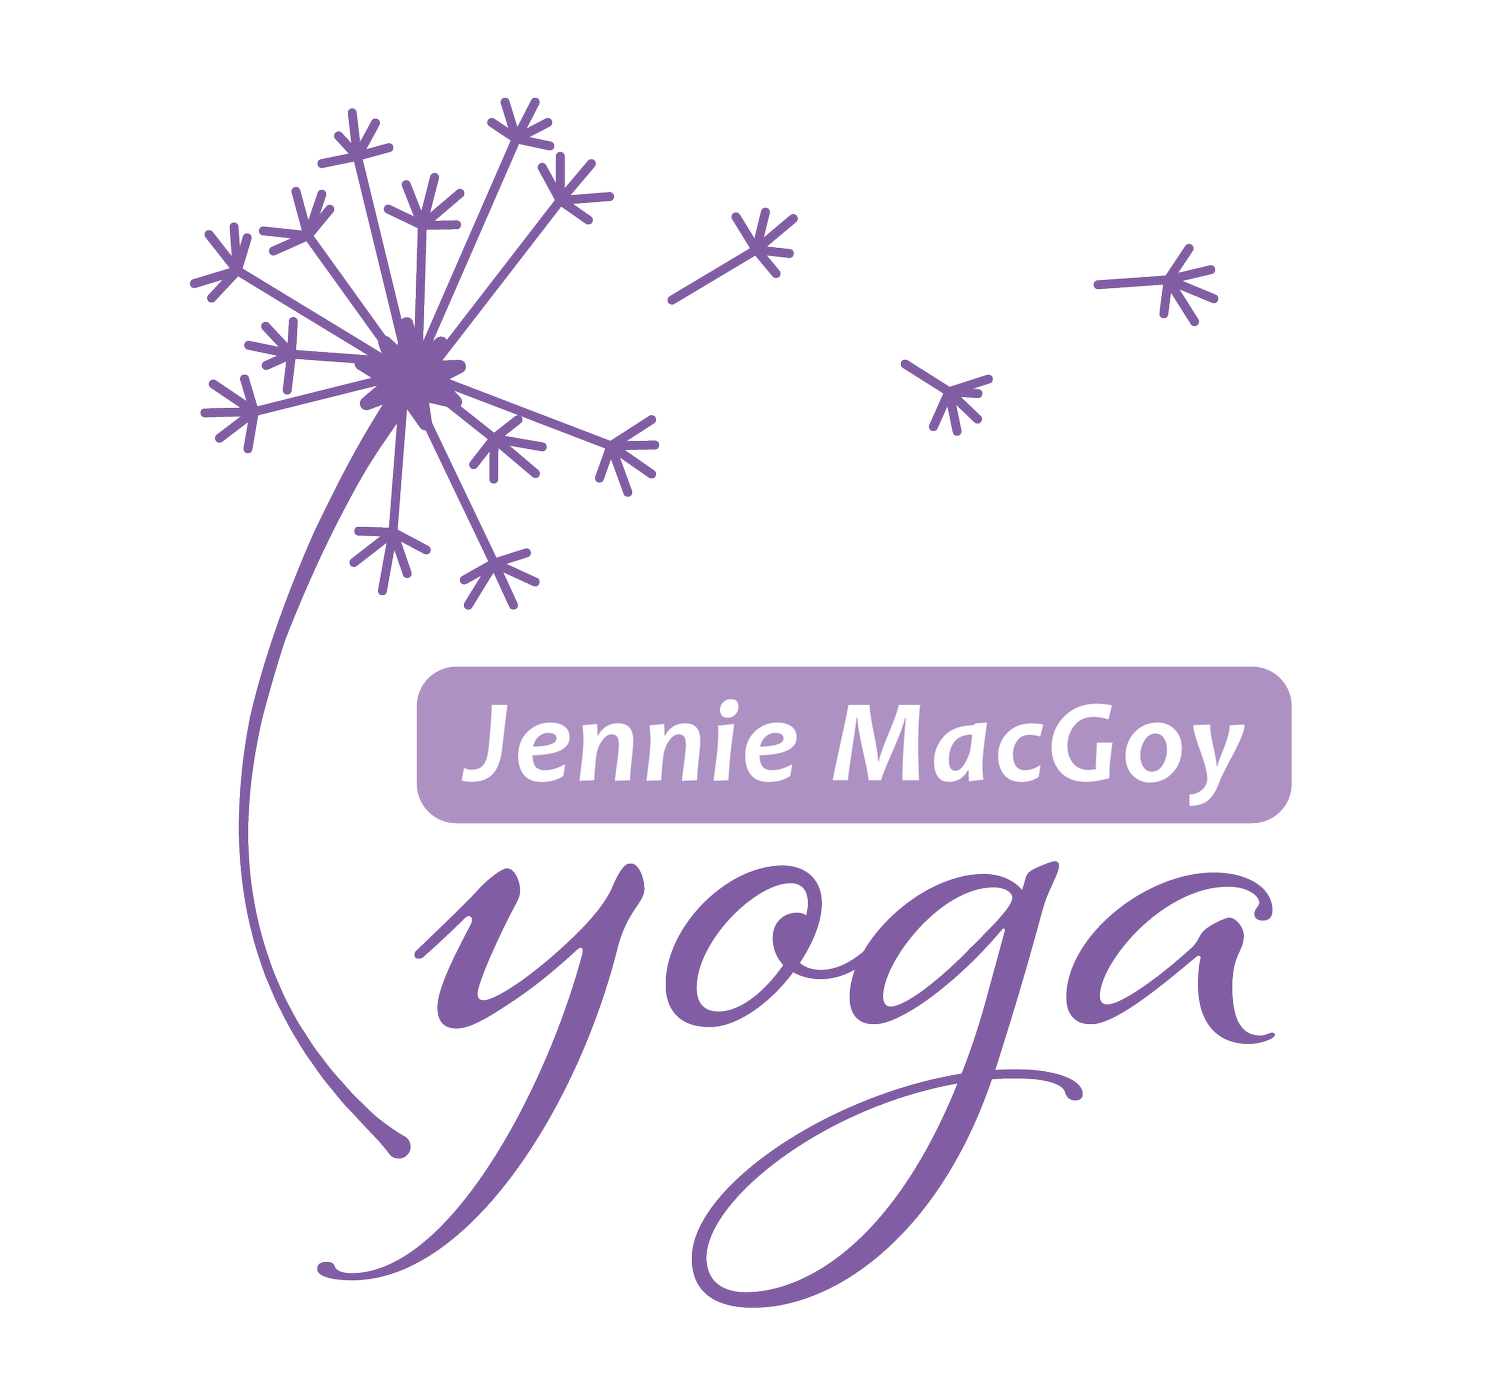 Jennie MacGoy Yoga - An Aging Well Partner